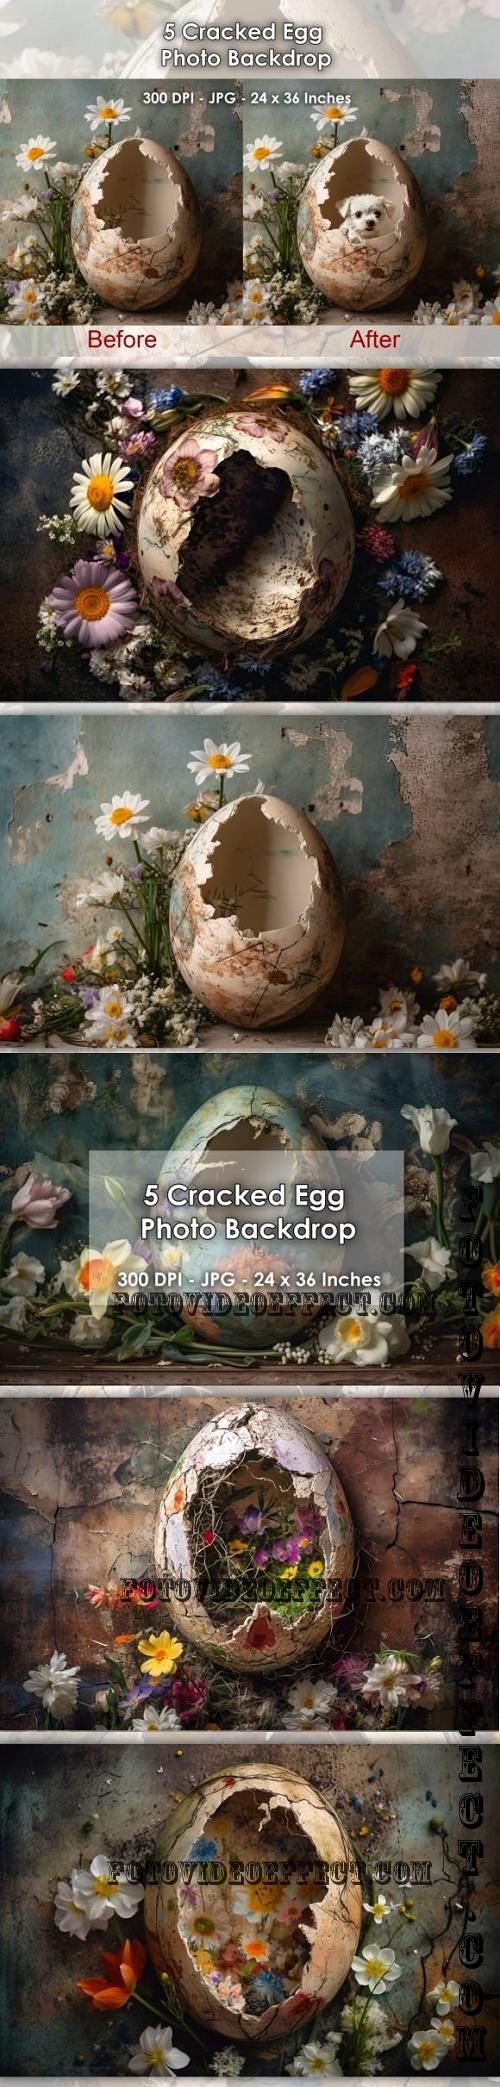 5 Cracked Eggs Photo Backdrop